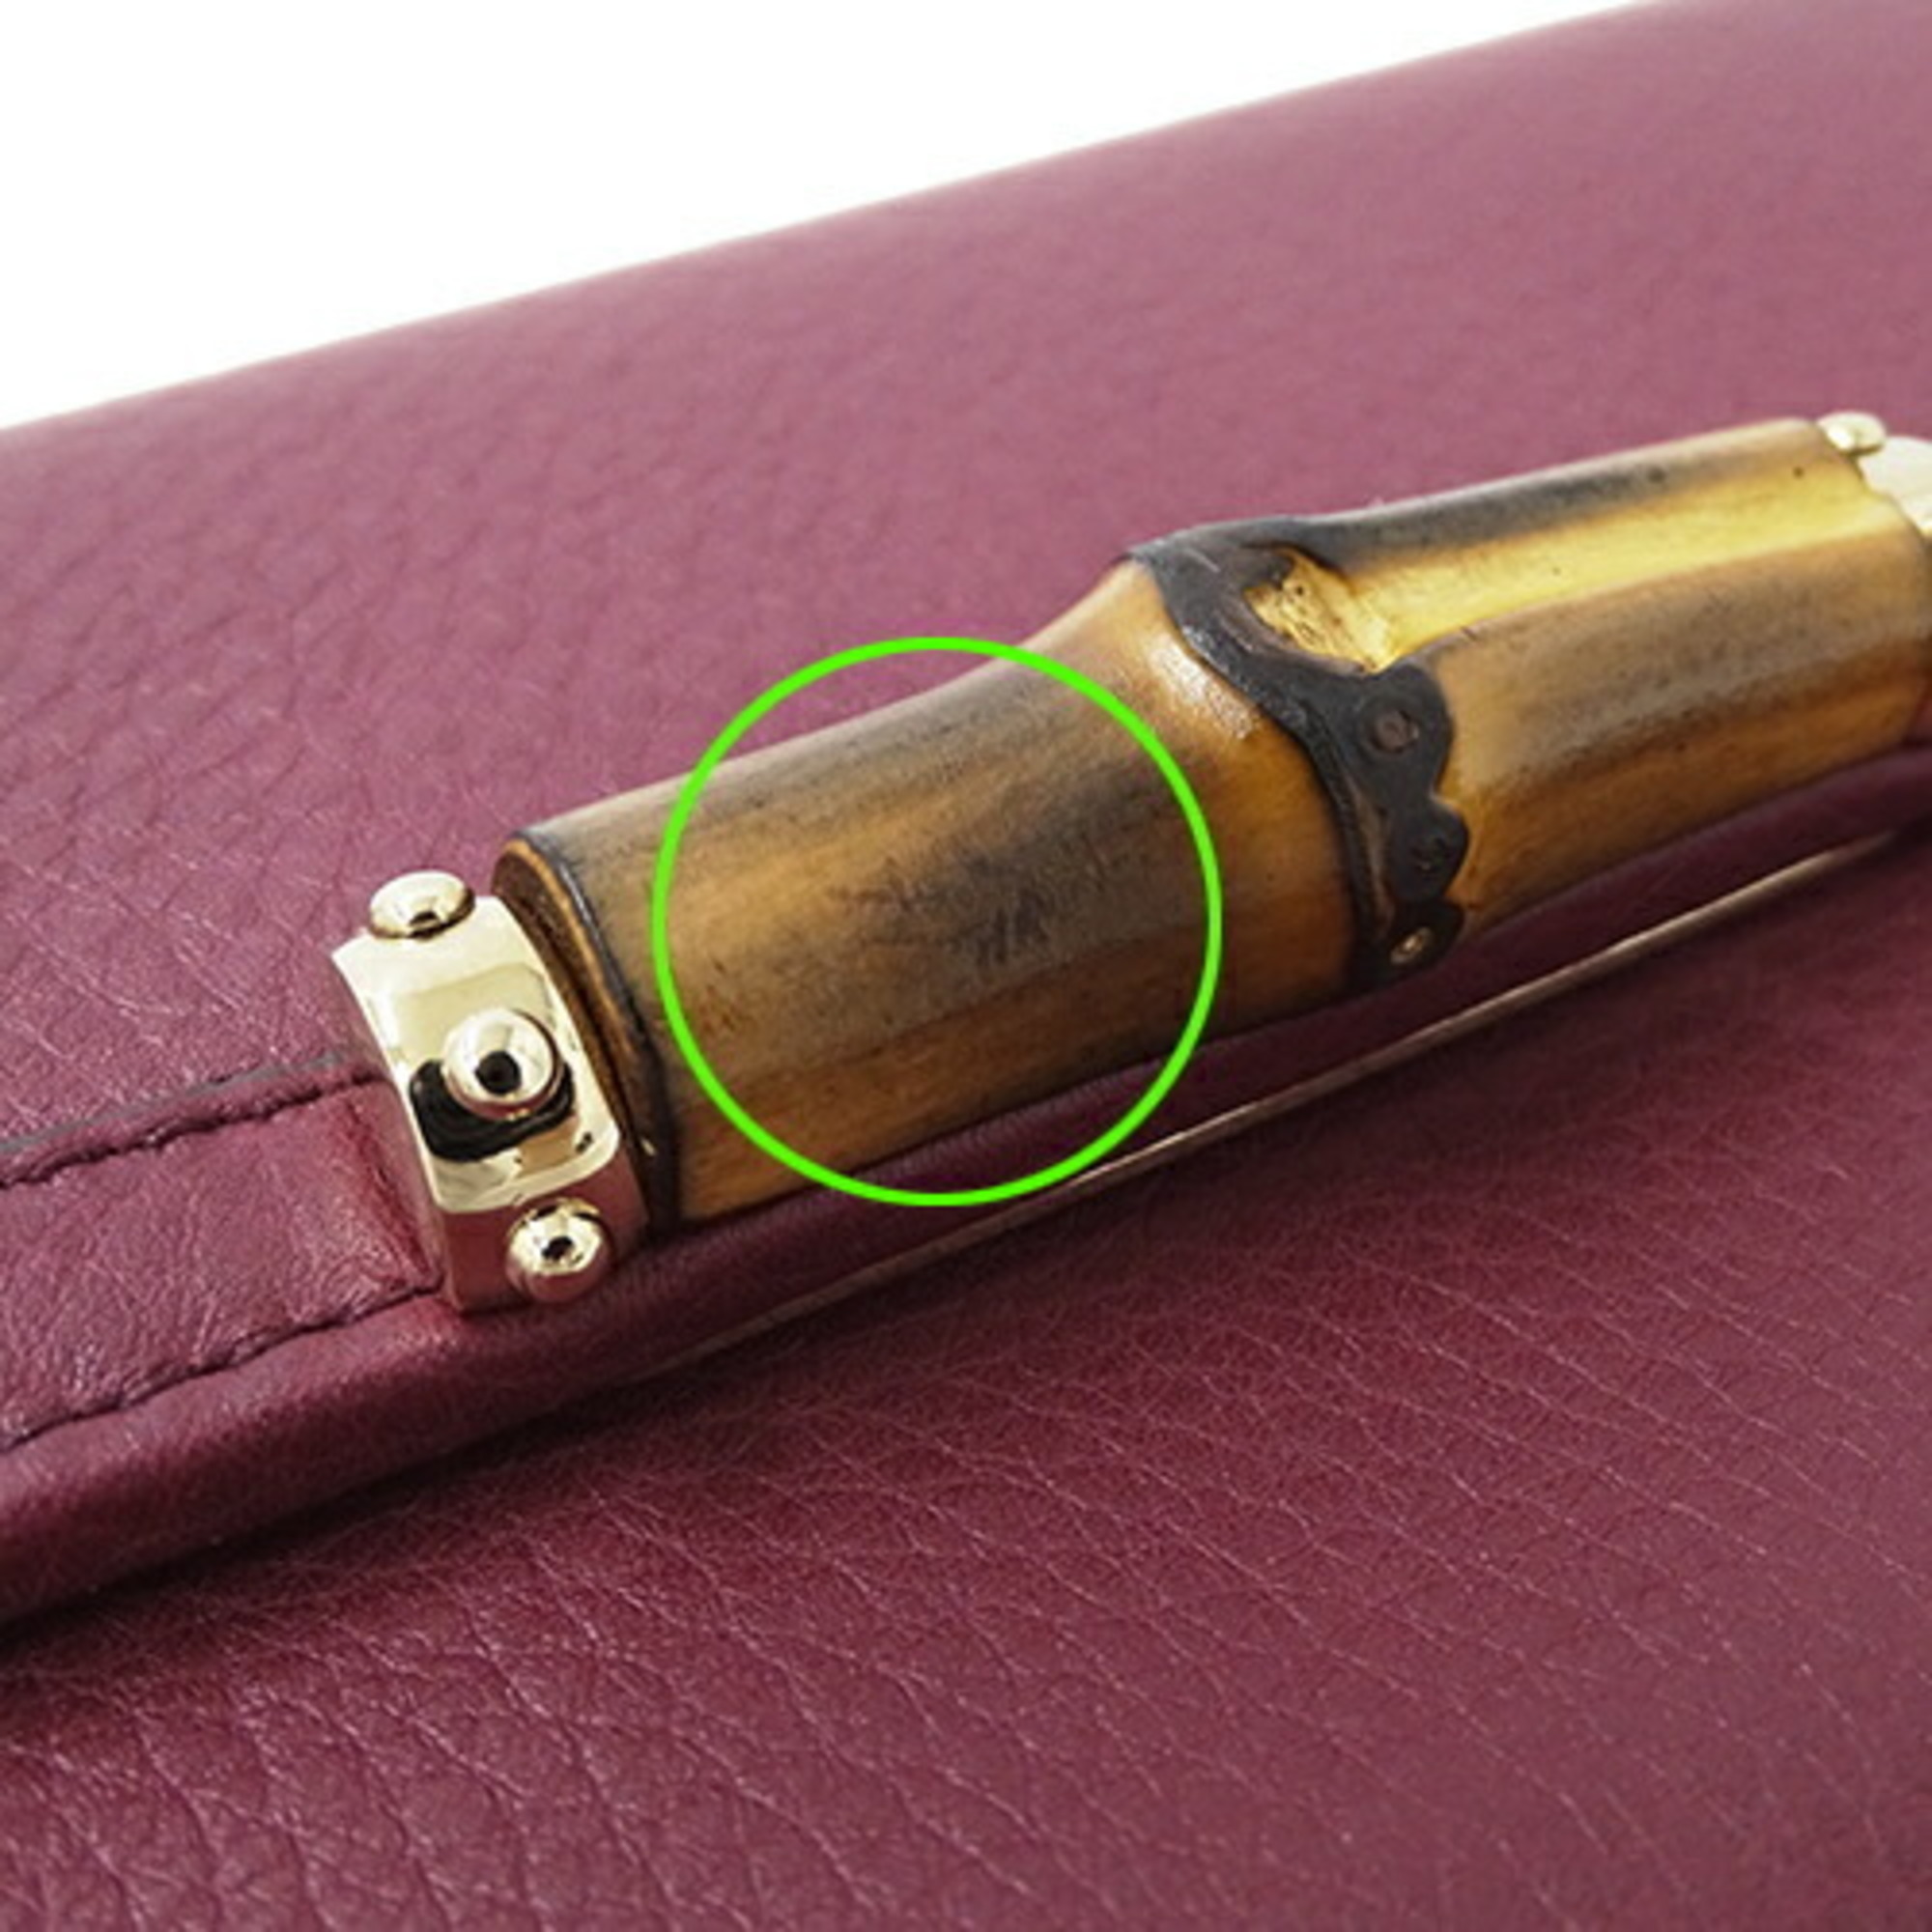 GUCCI Women's Wallet Long Bamboo Leather Wine 257018 Purple